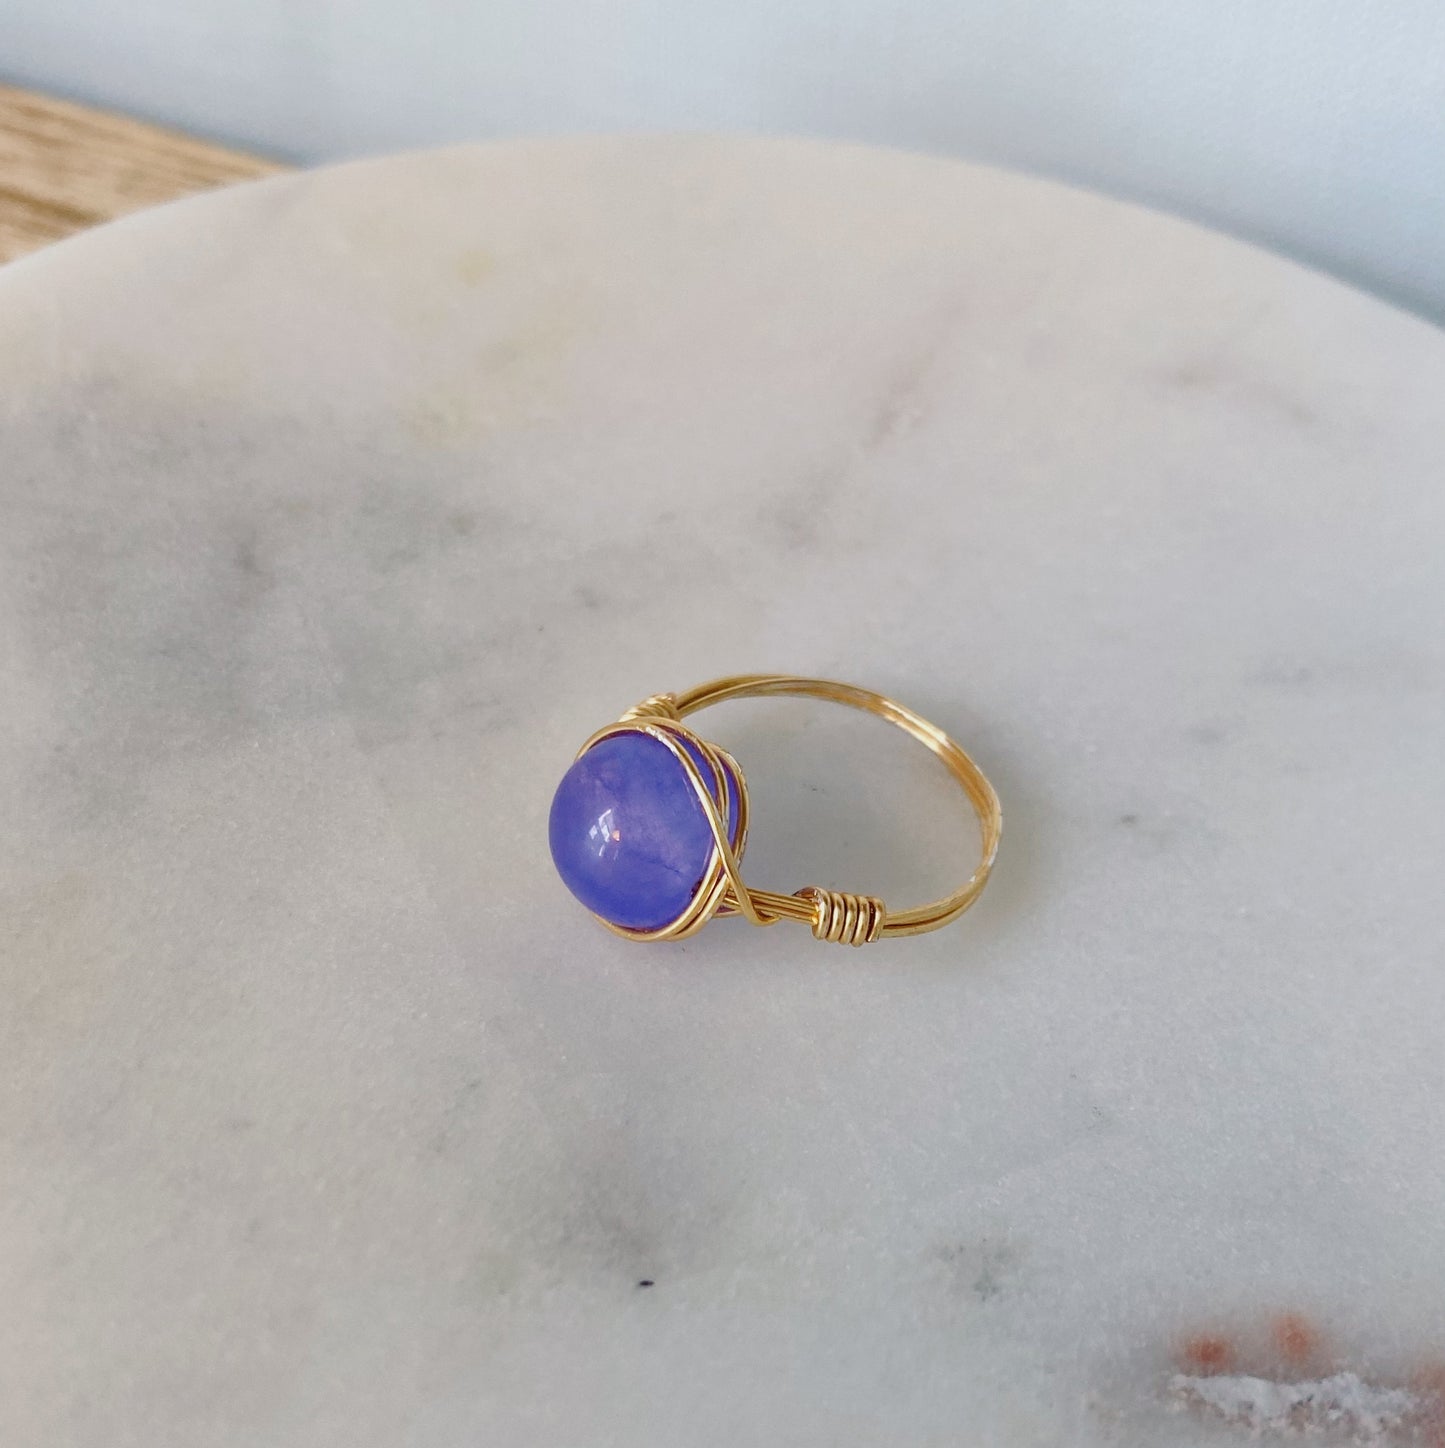 Lavender quartz wire wrapped ring